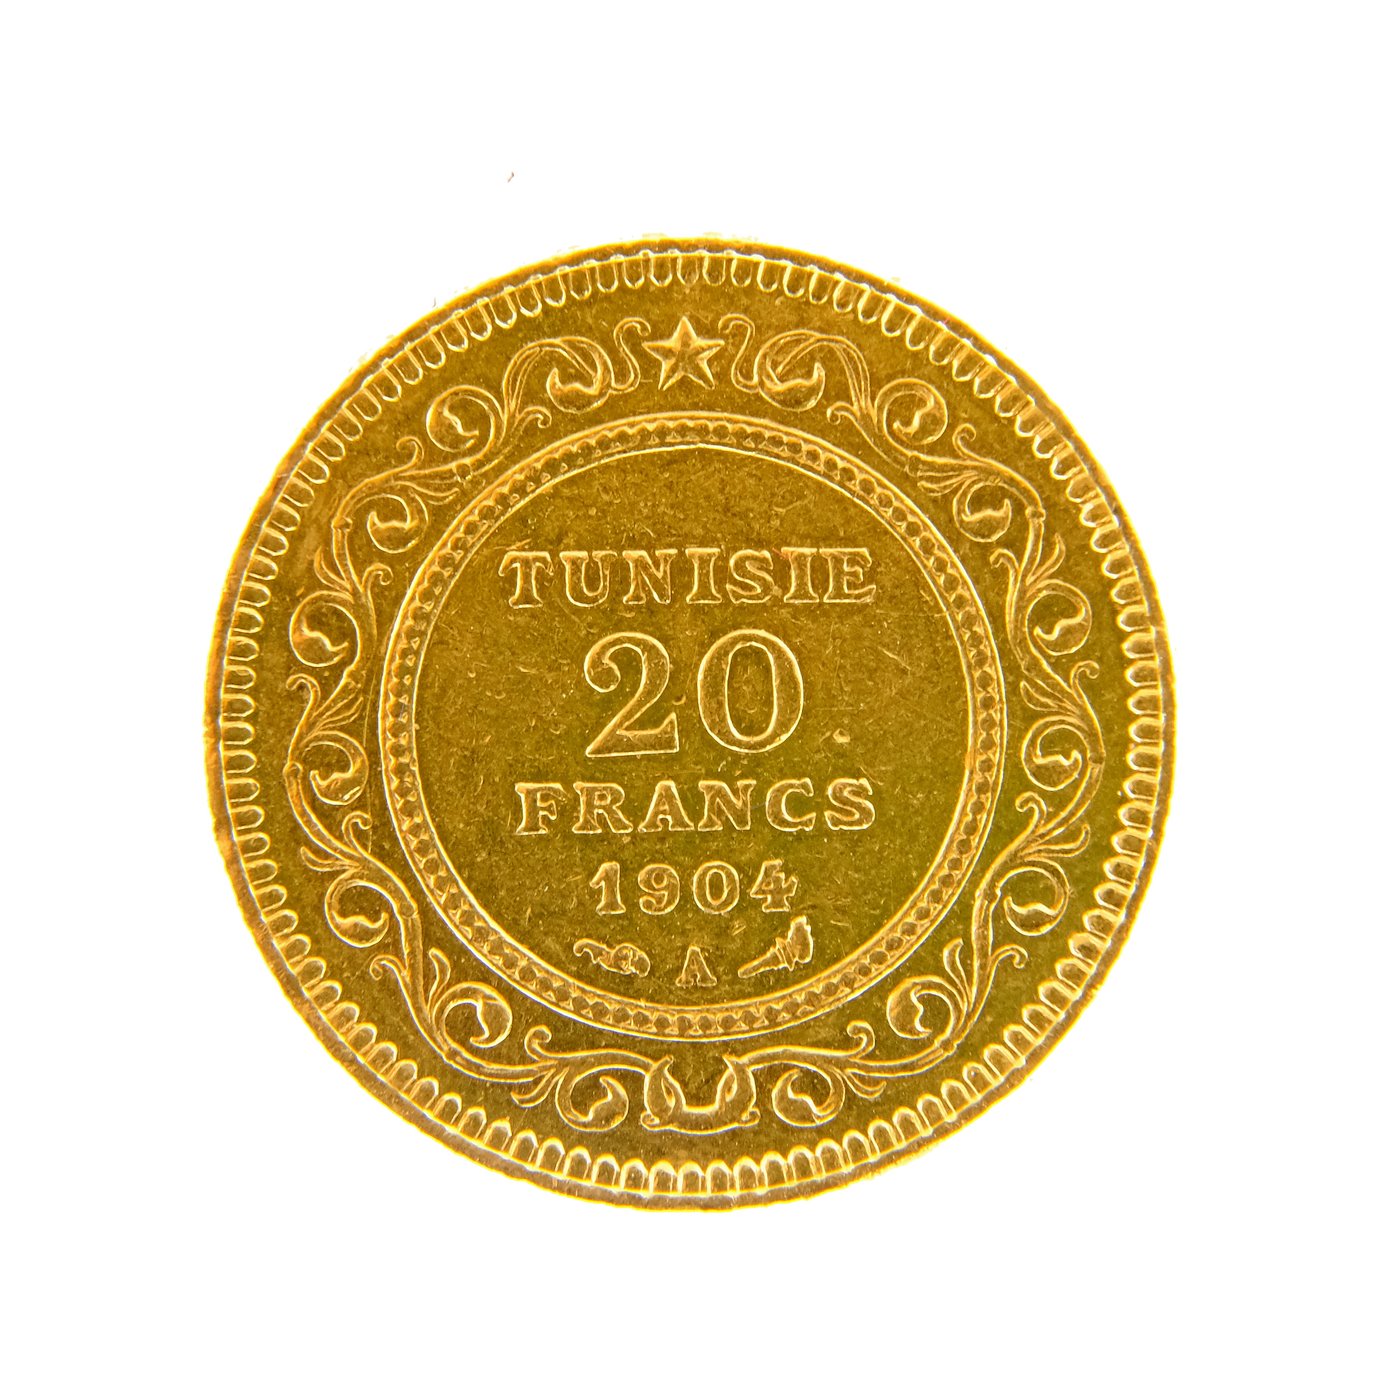 .. - Tunisko zlatý 20 frank 1904 Mohamed IV., zlato 900/1000, hrubá hmotnost 6,45g